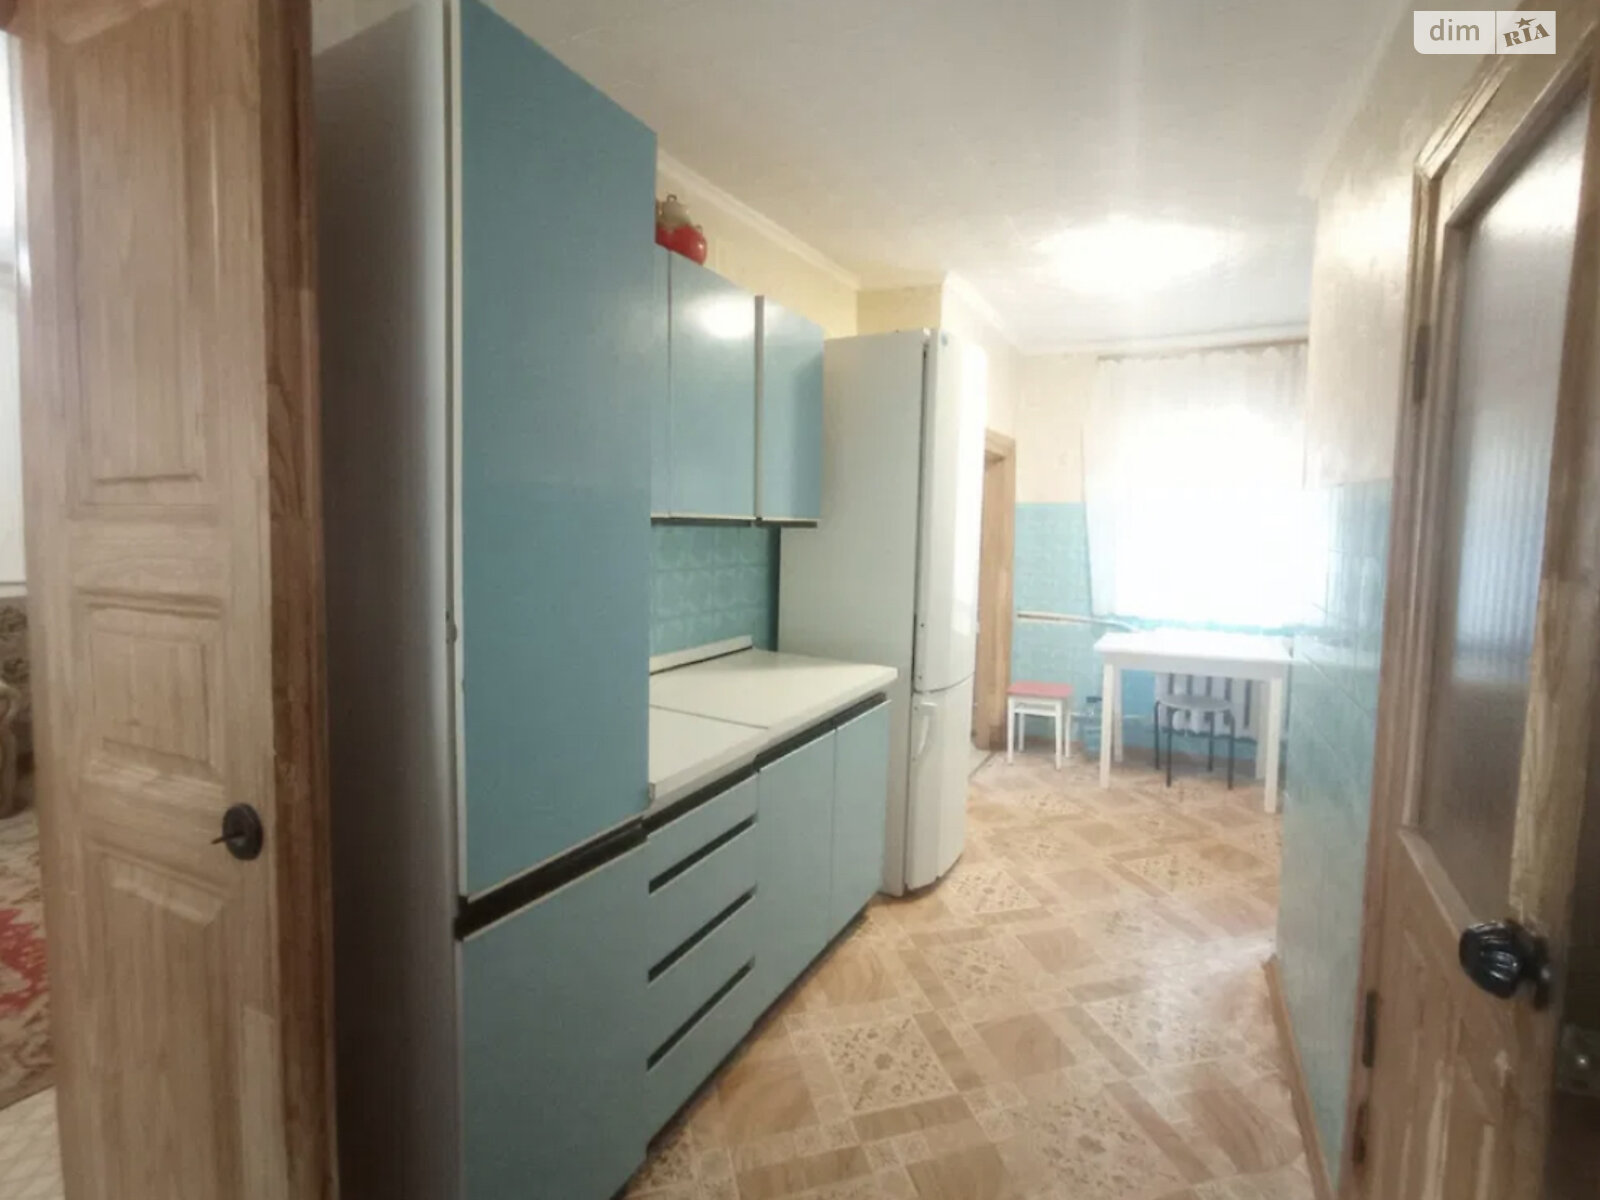 Продажа части дома в Николаеве, район Центр, 2 комнаты фото 1